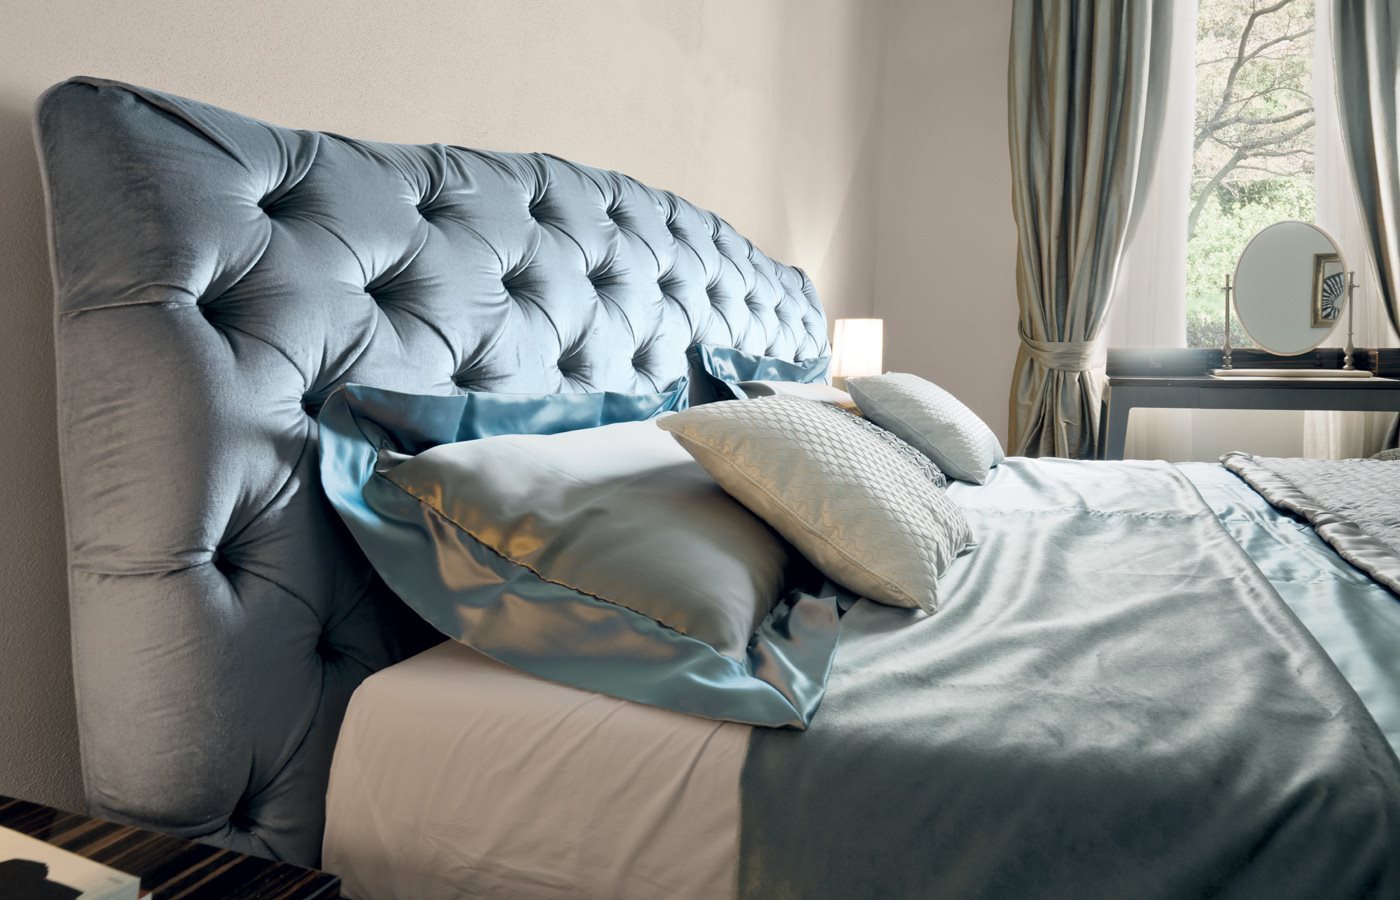 Bed linen set